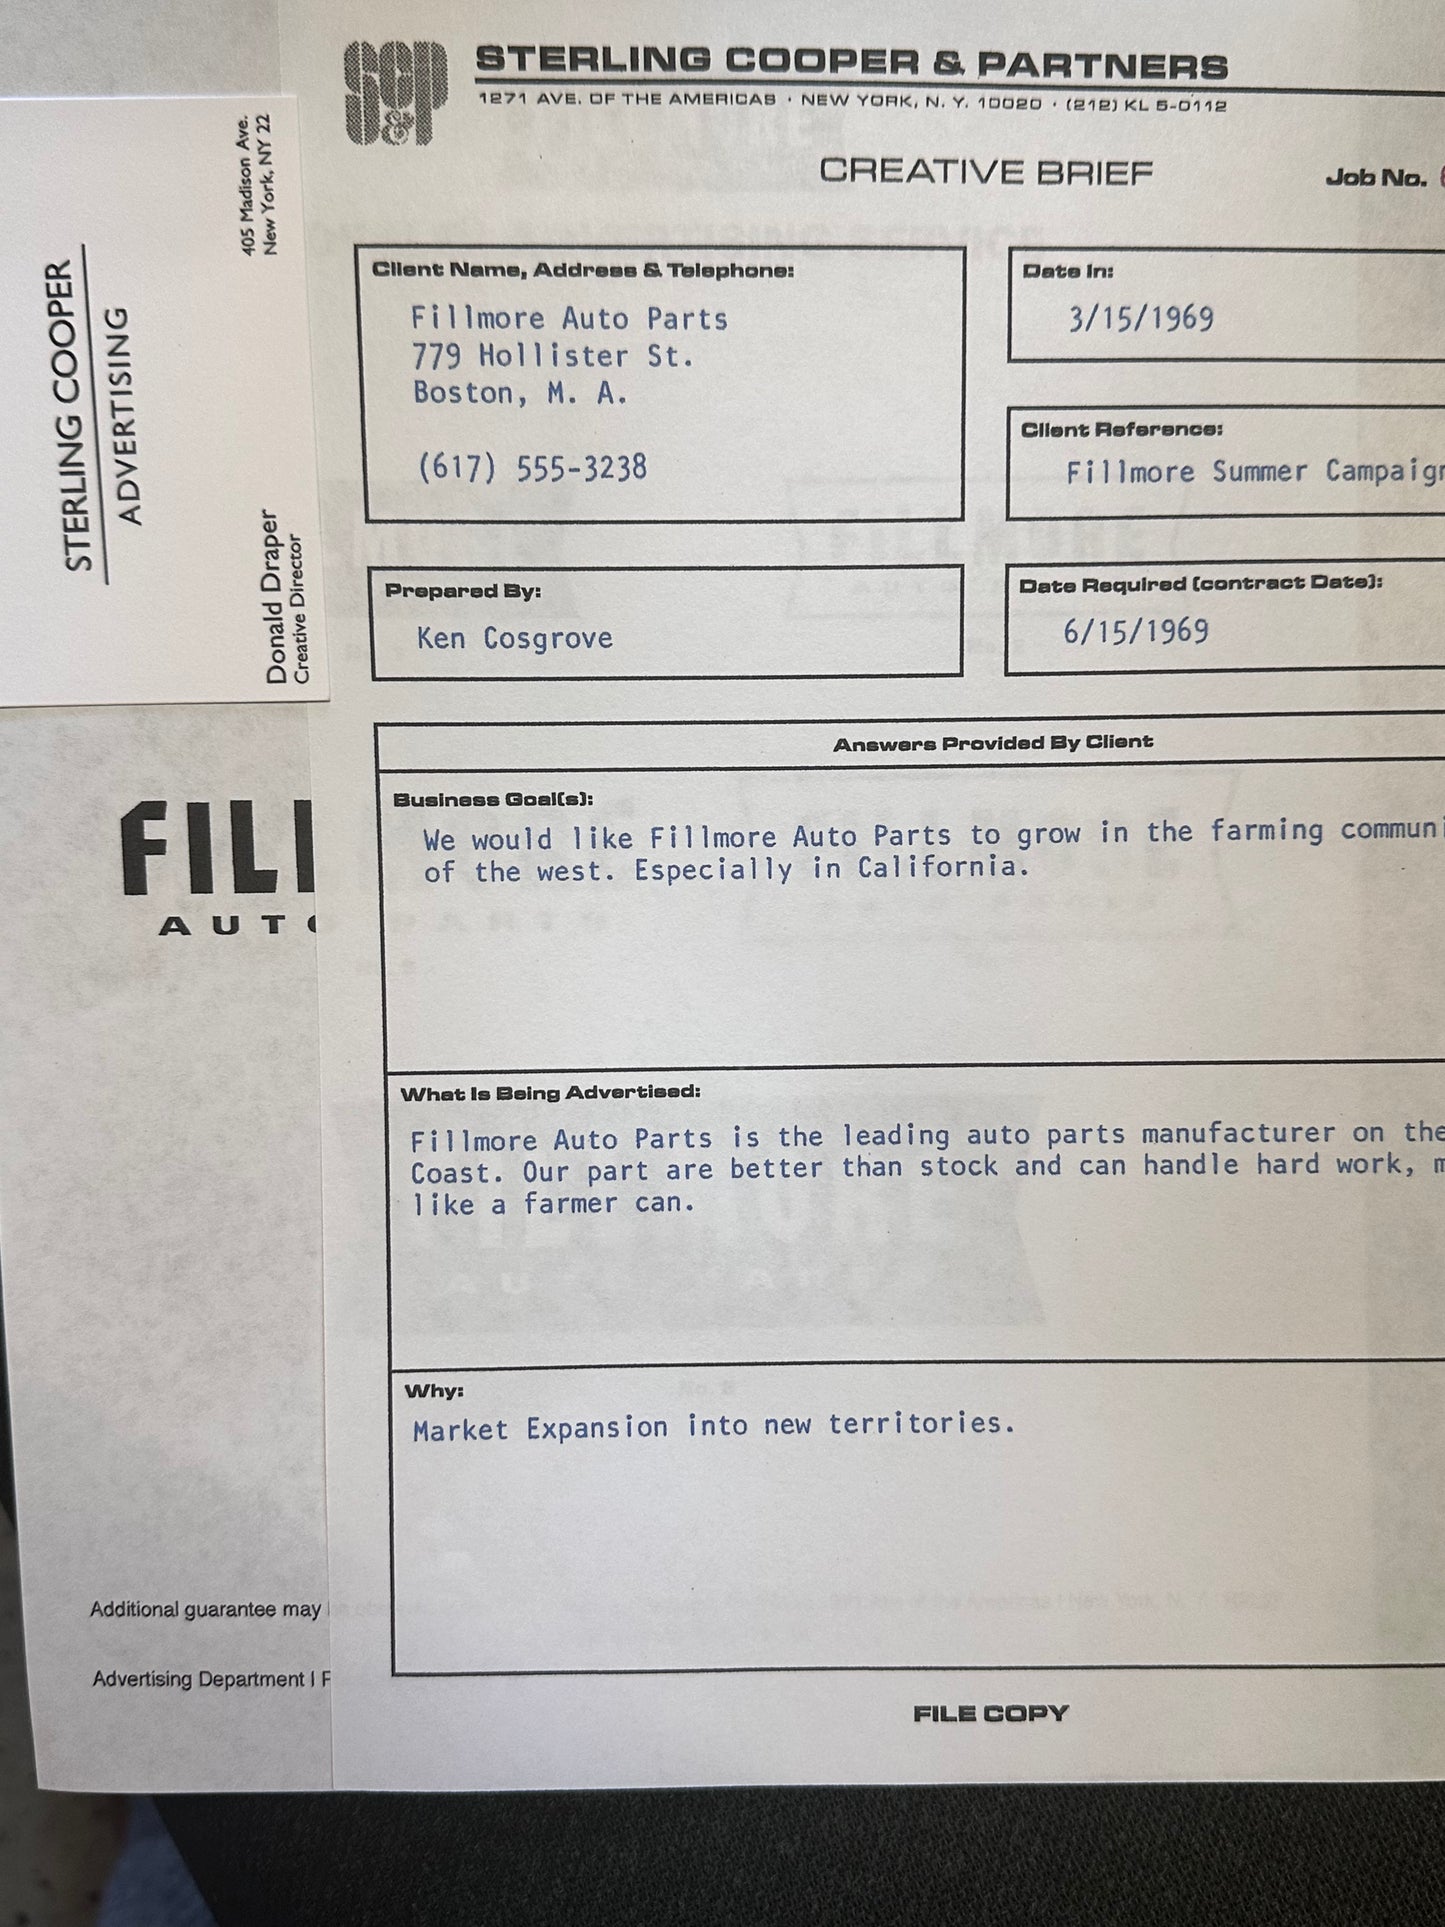 Mad Men: Ken Cosgrove Fillmore Auto Parts Creative Brief with Don Draper Business Card